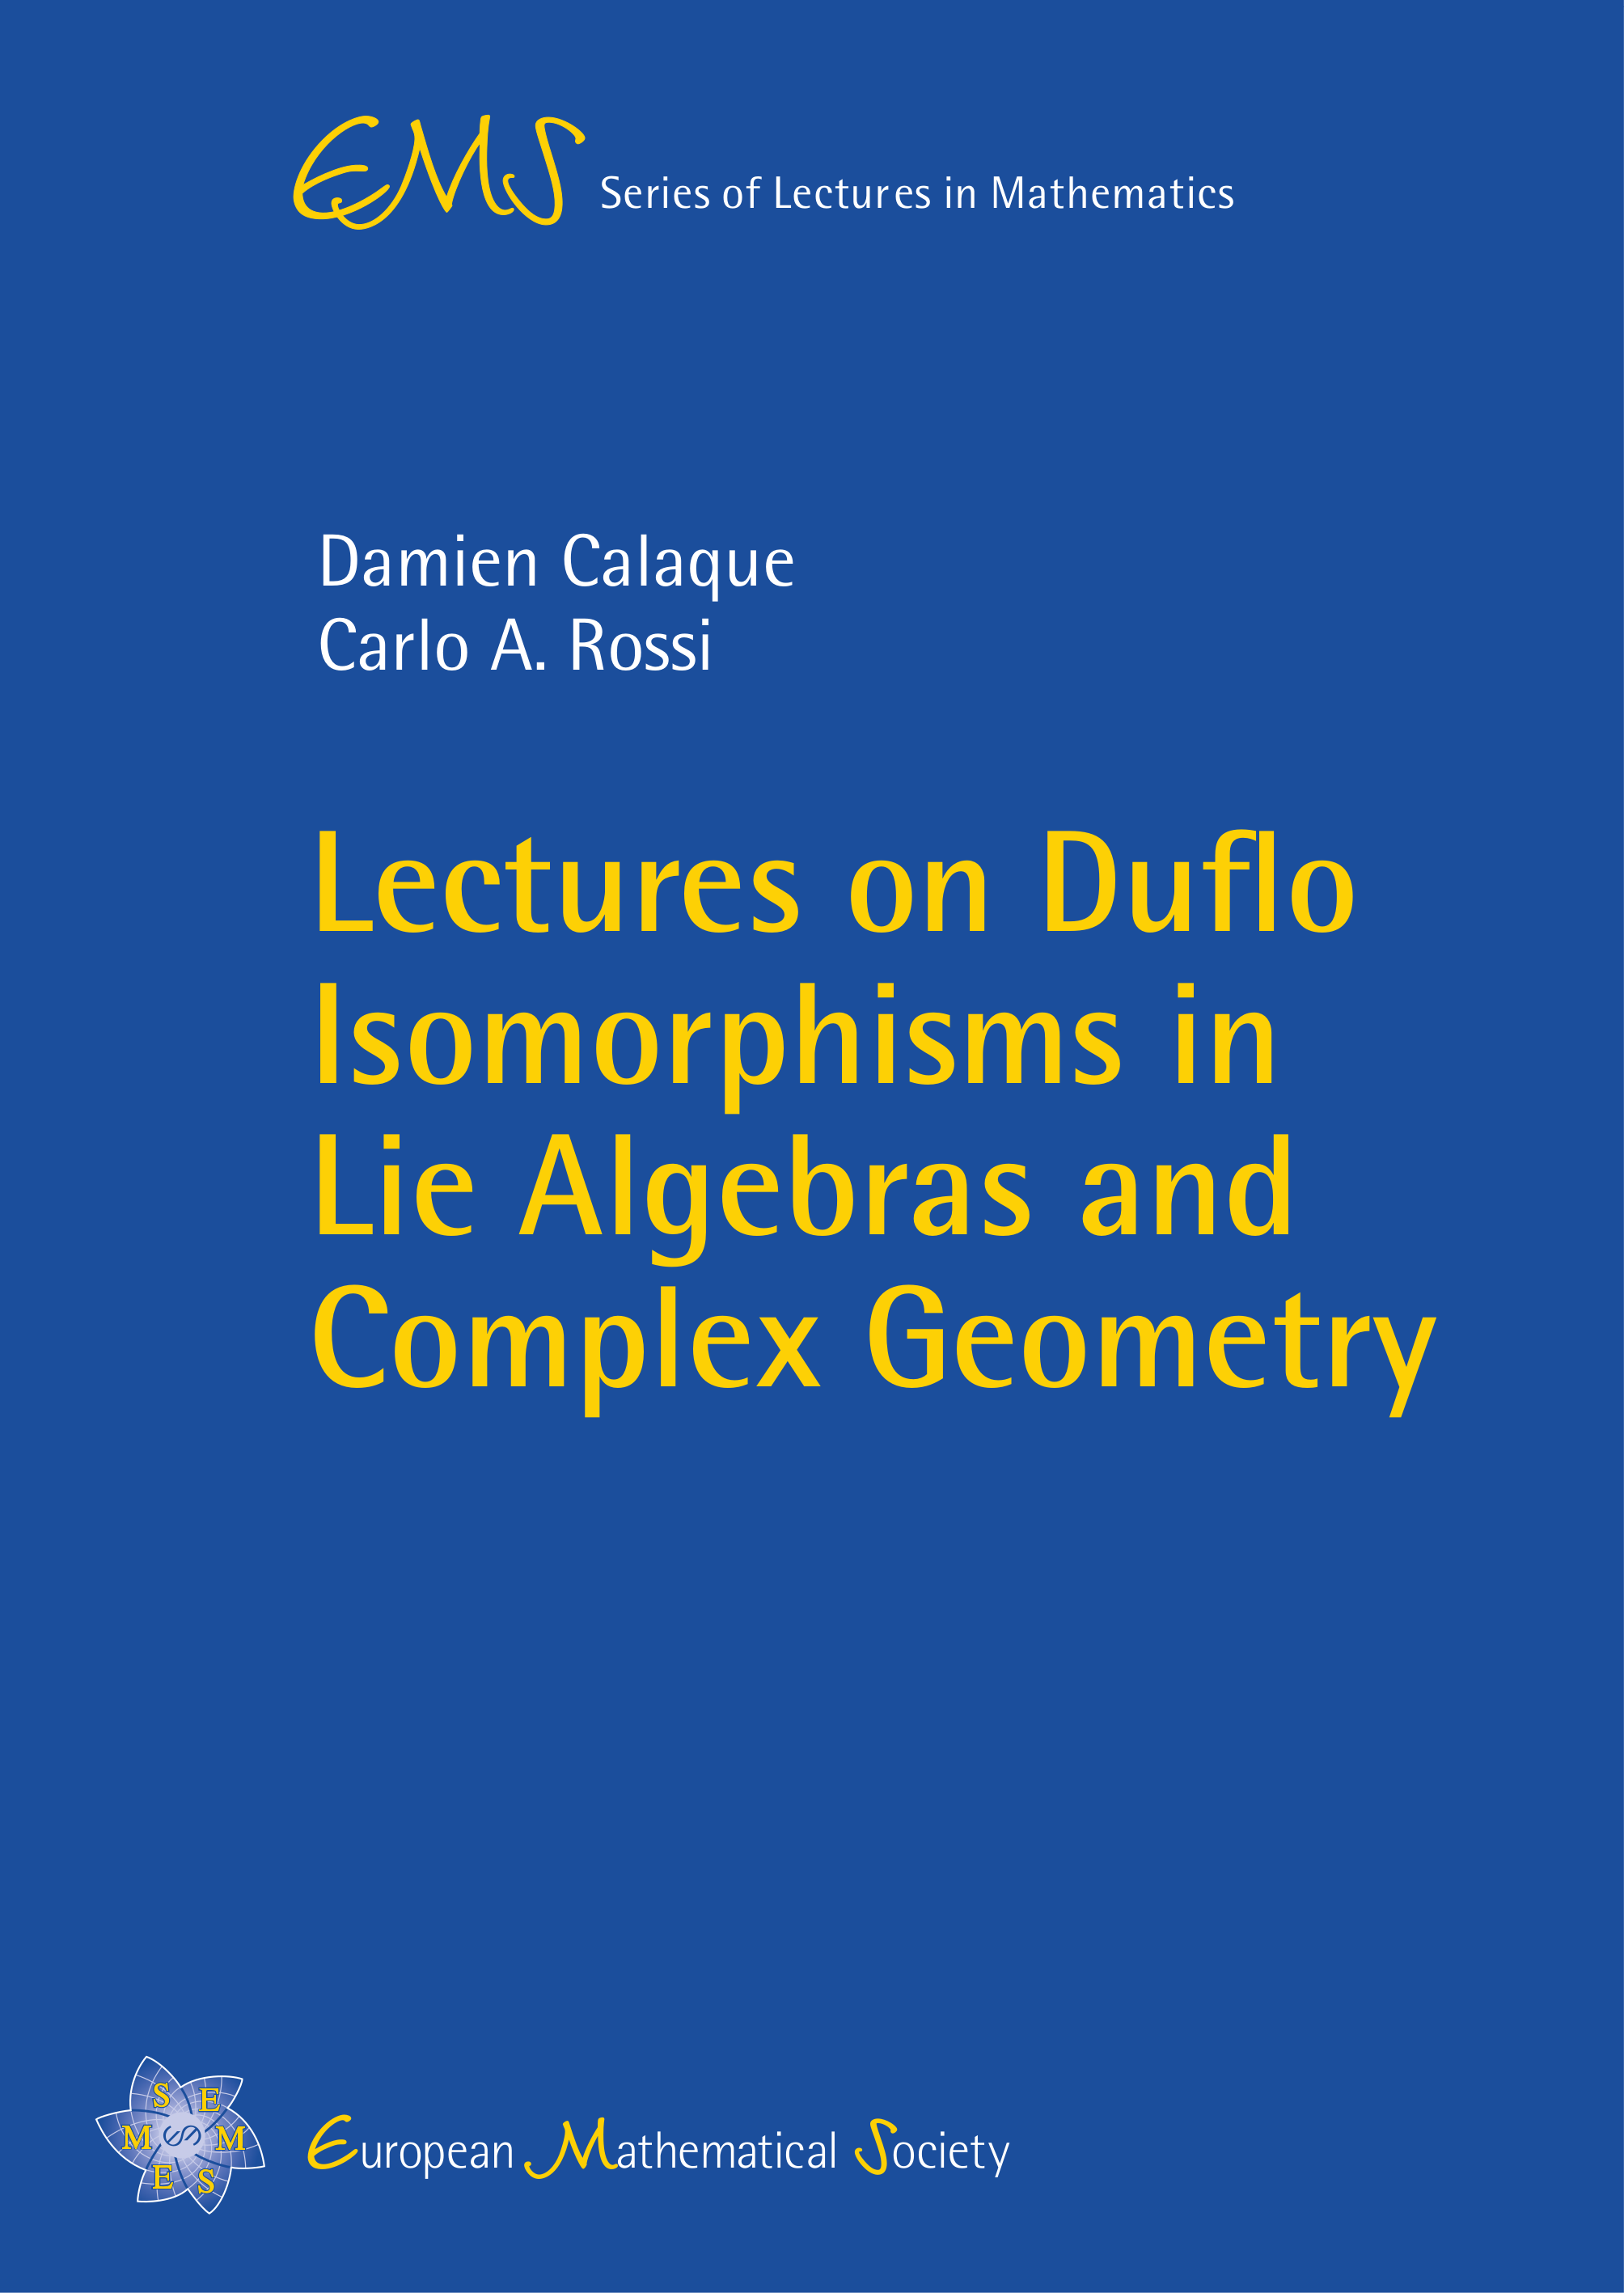 Lie algebra cohomology and the Duflo isomorphism cover